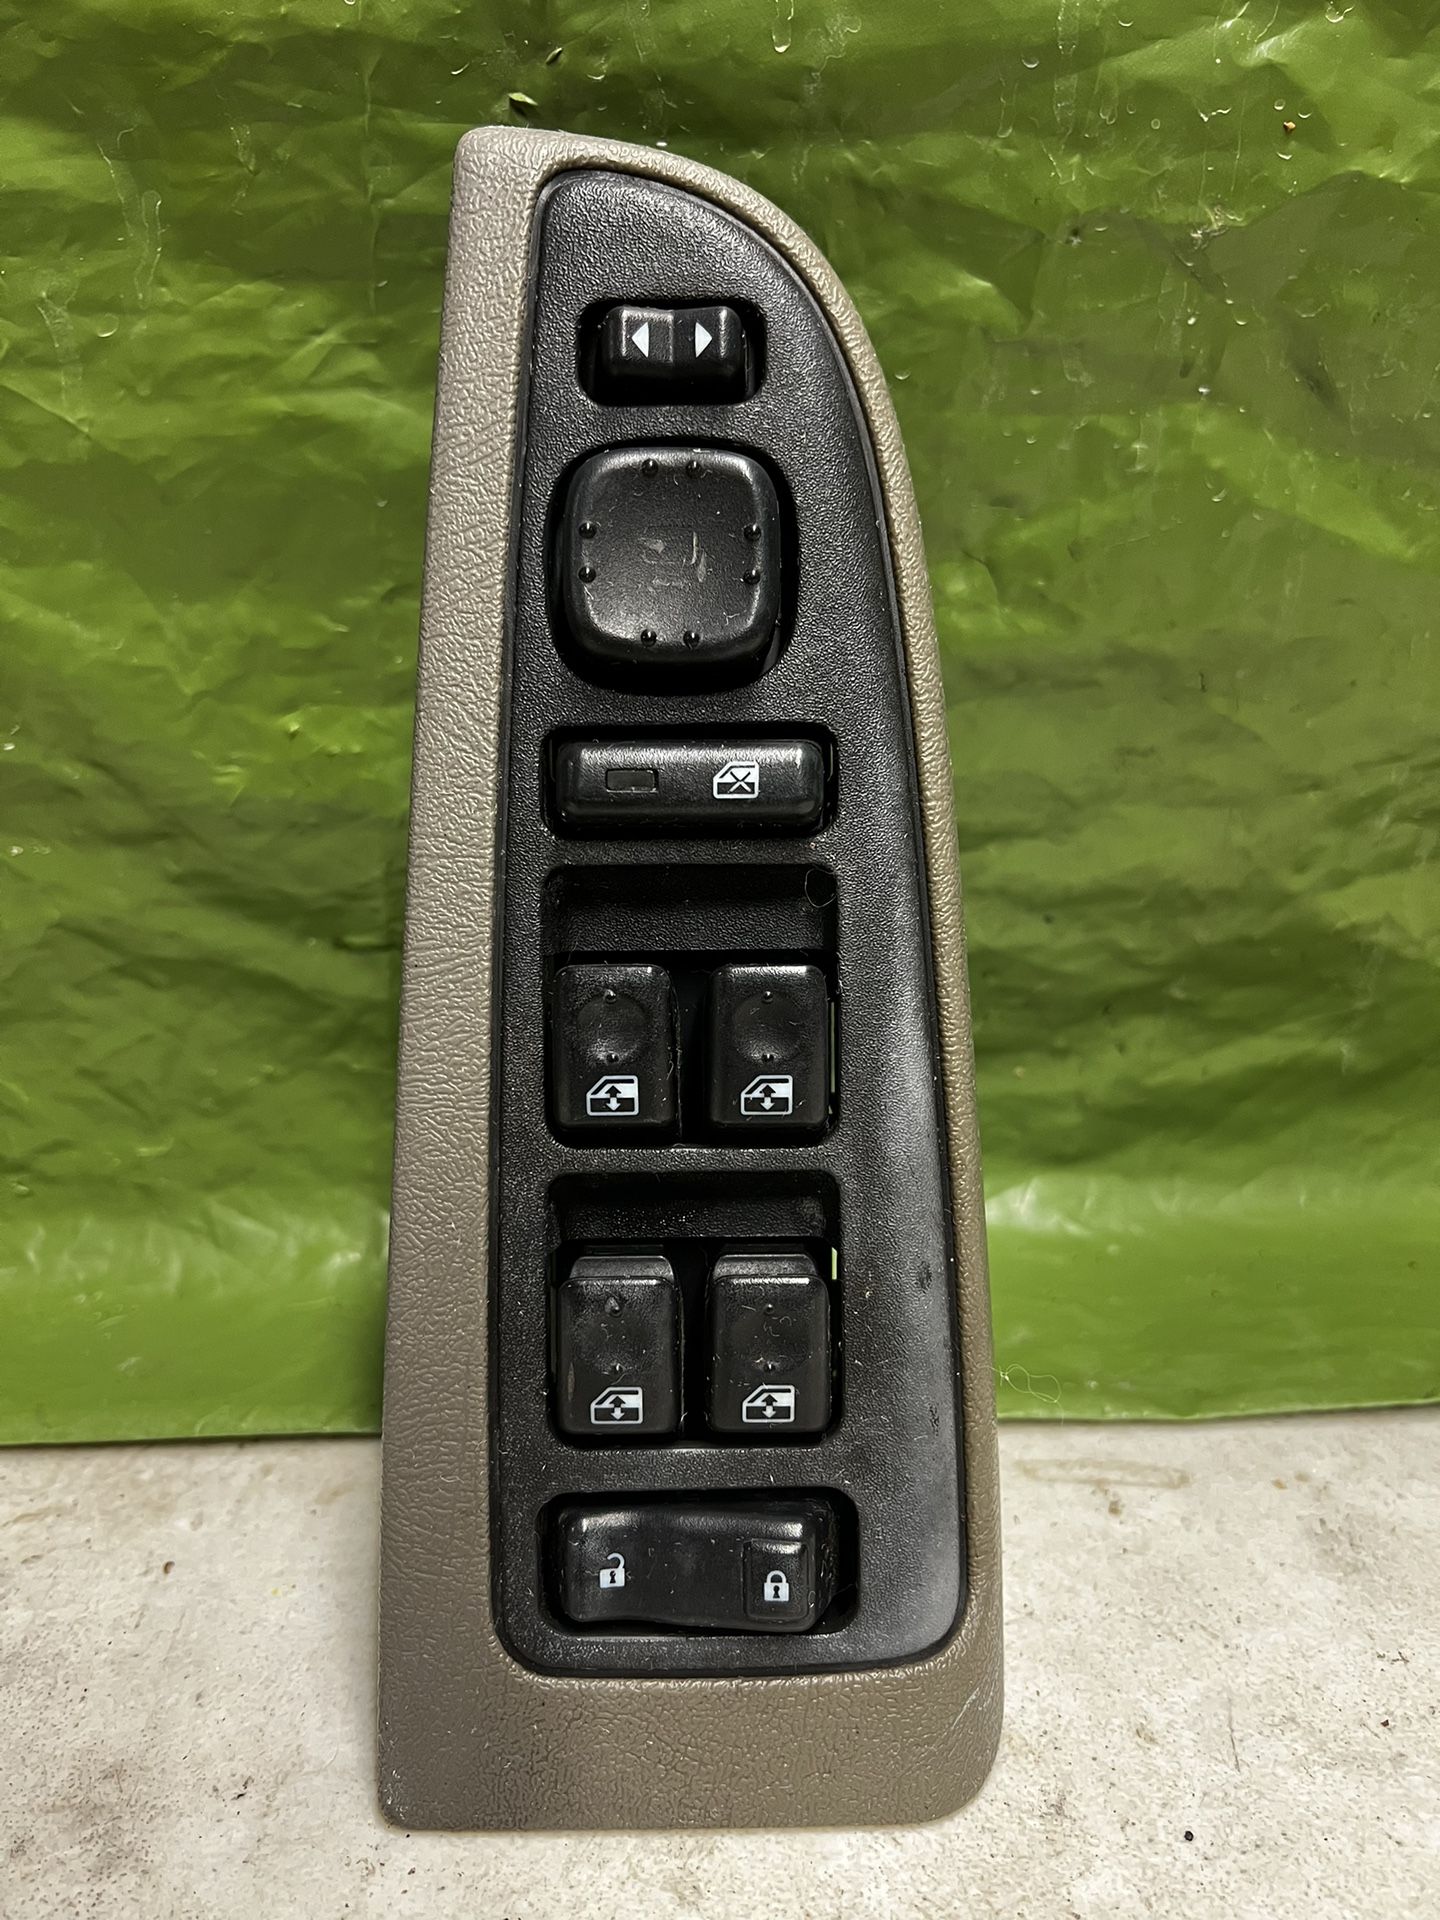 03-06 Chevy Silverado/GMC Sierra Master Window Control Switch OEM Gray